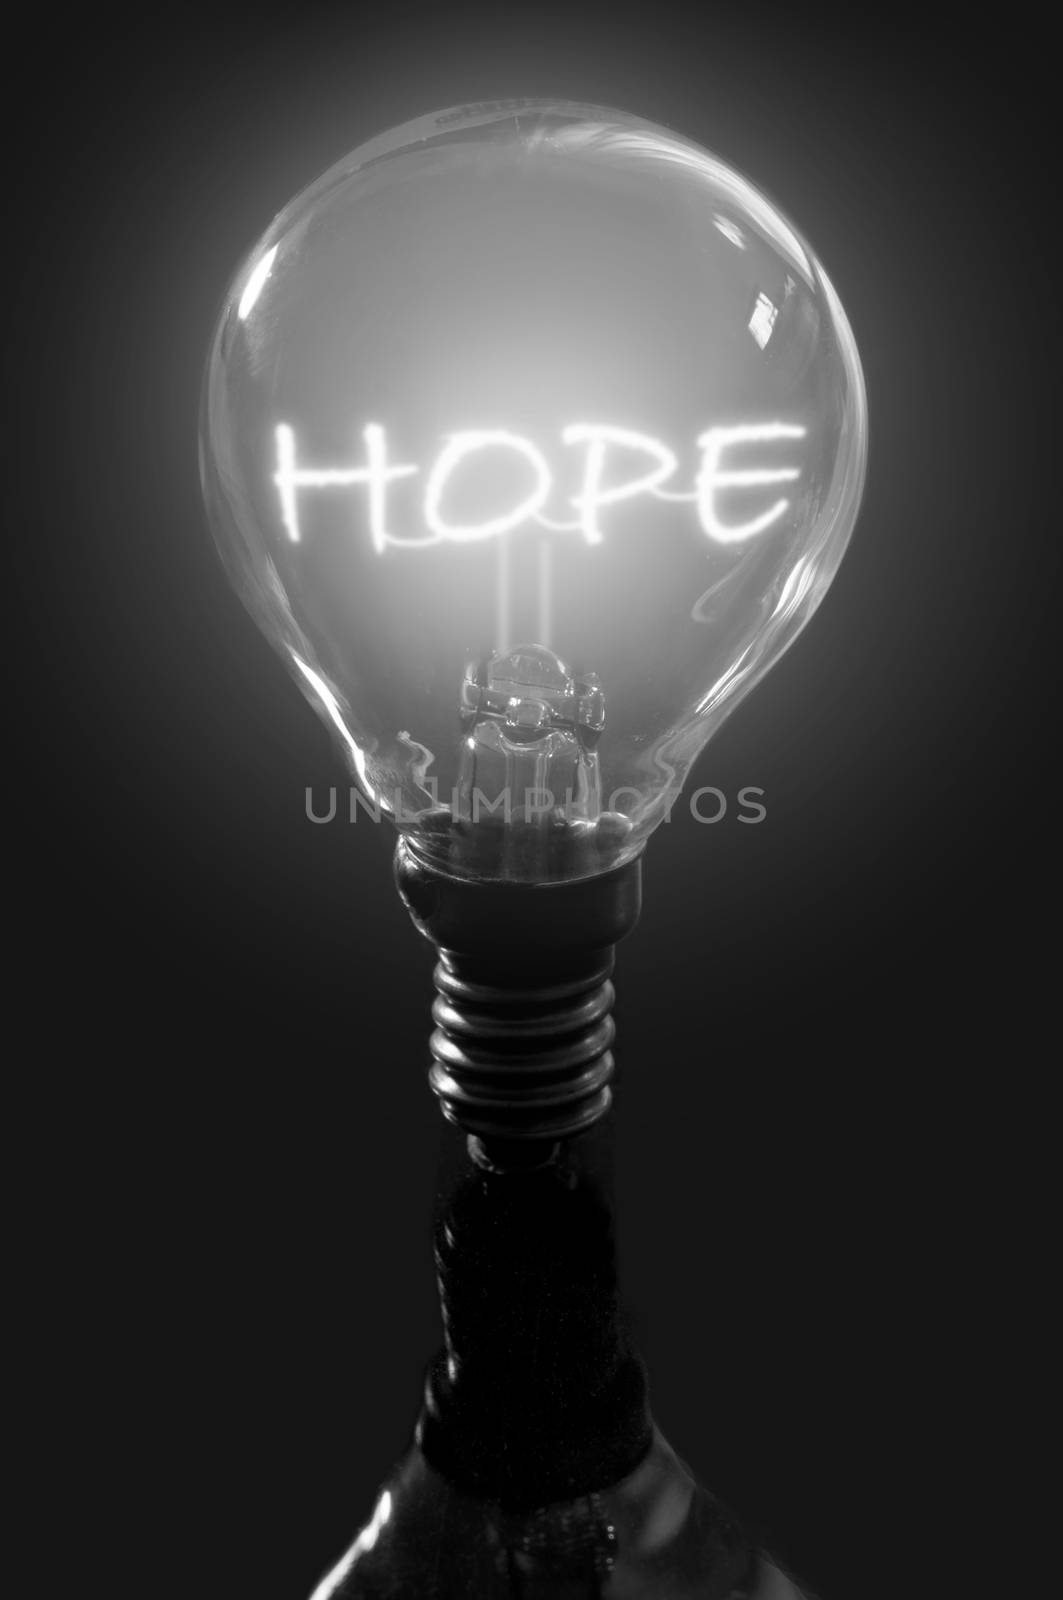 Hope by unikpix